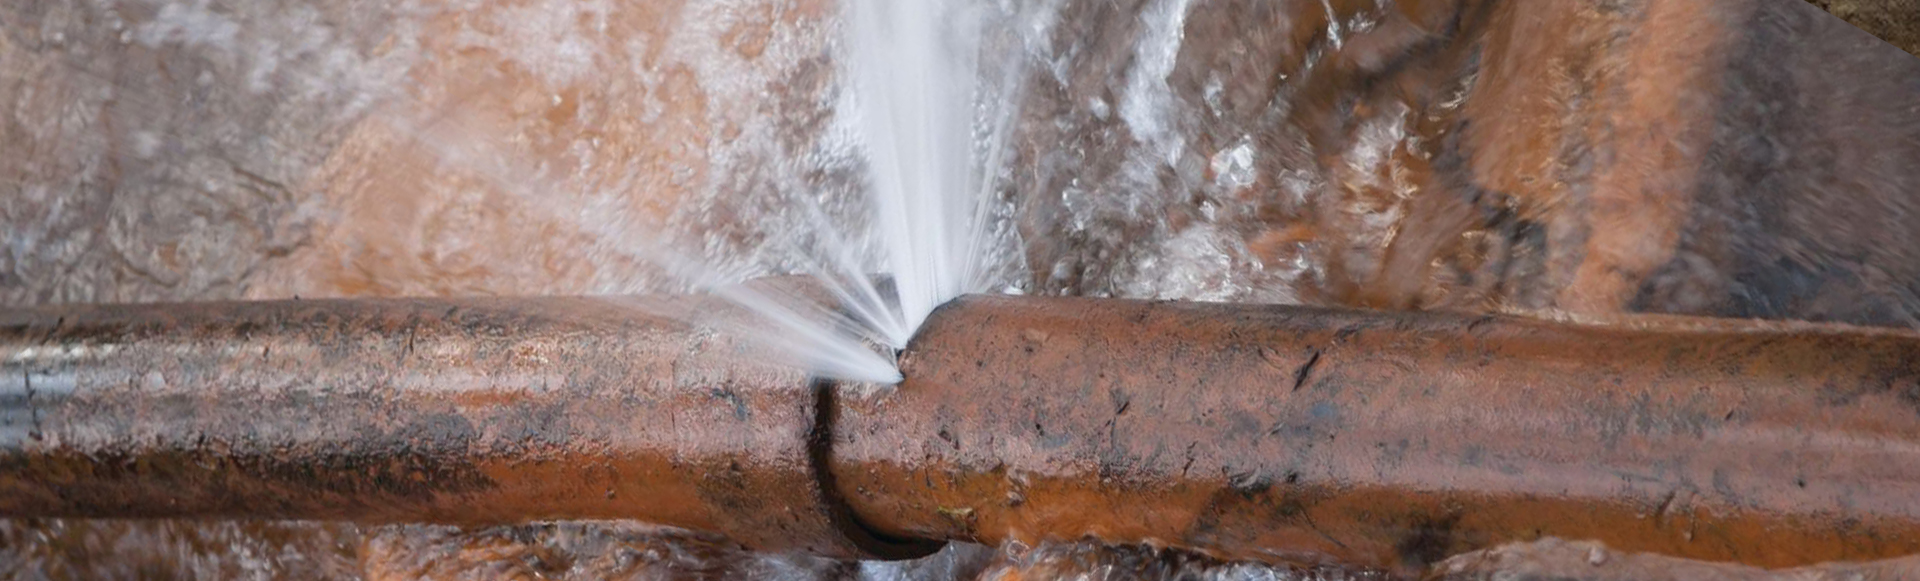 Broken Water Line Means Repair Costs, High Water Bill for Vulnerable Homeowner